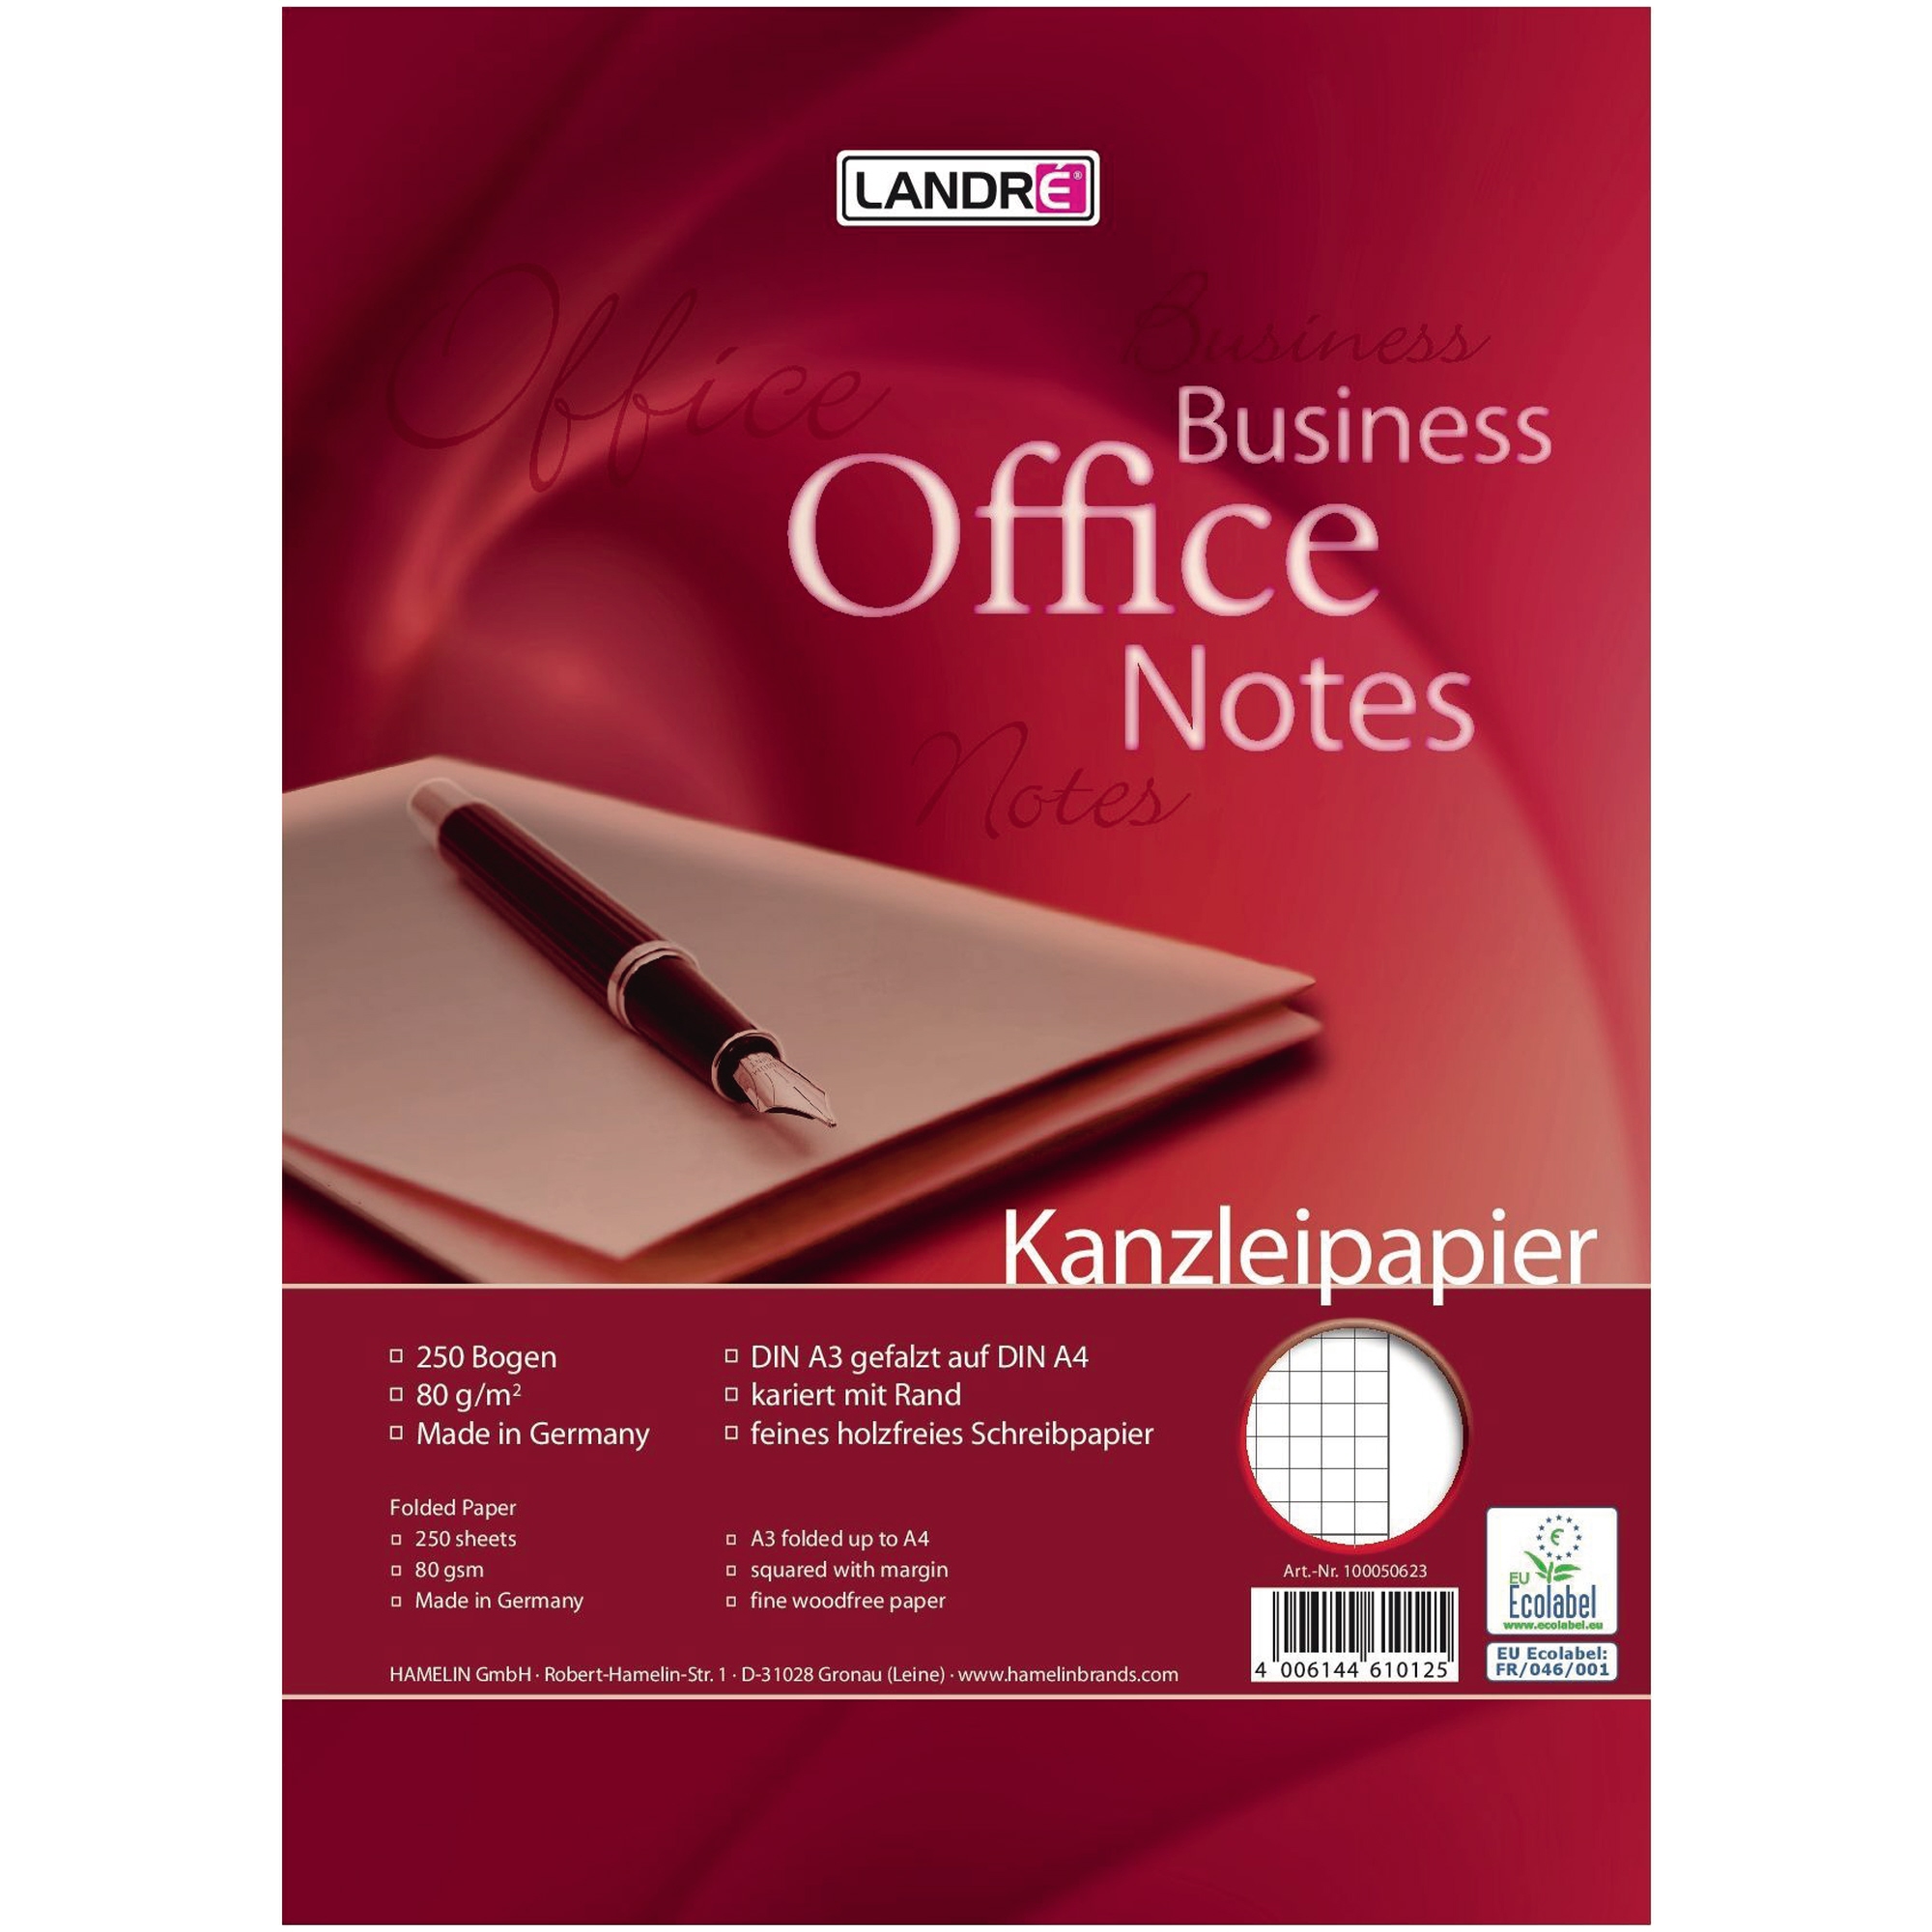 Landré Kanzleipapier Business Office Notes 26